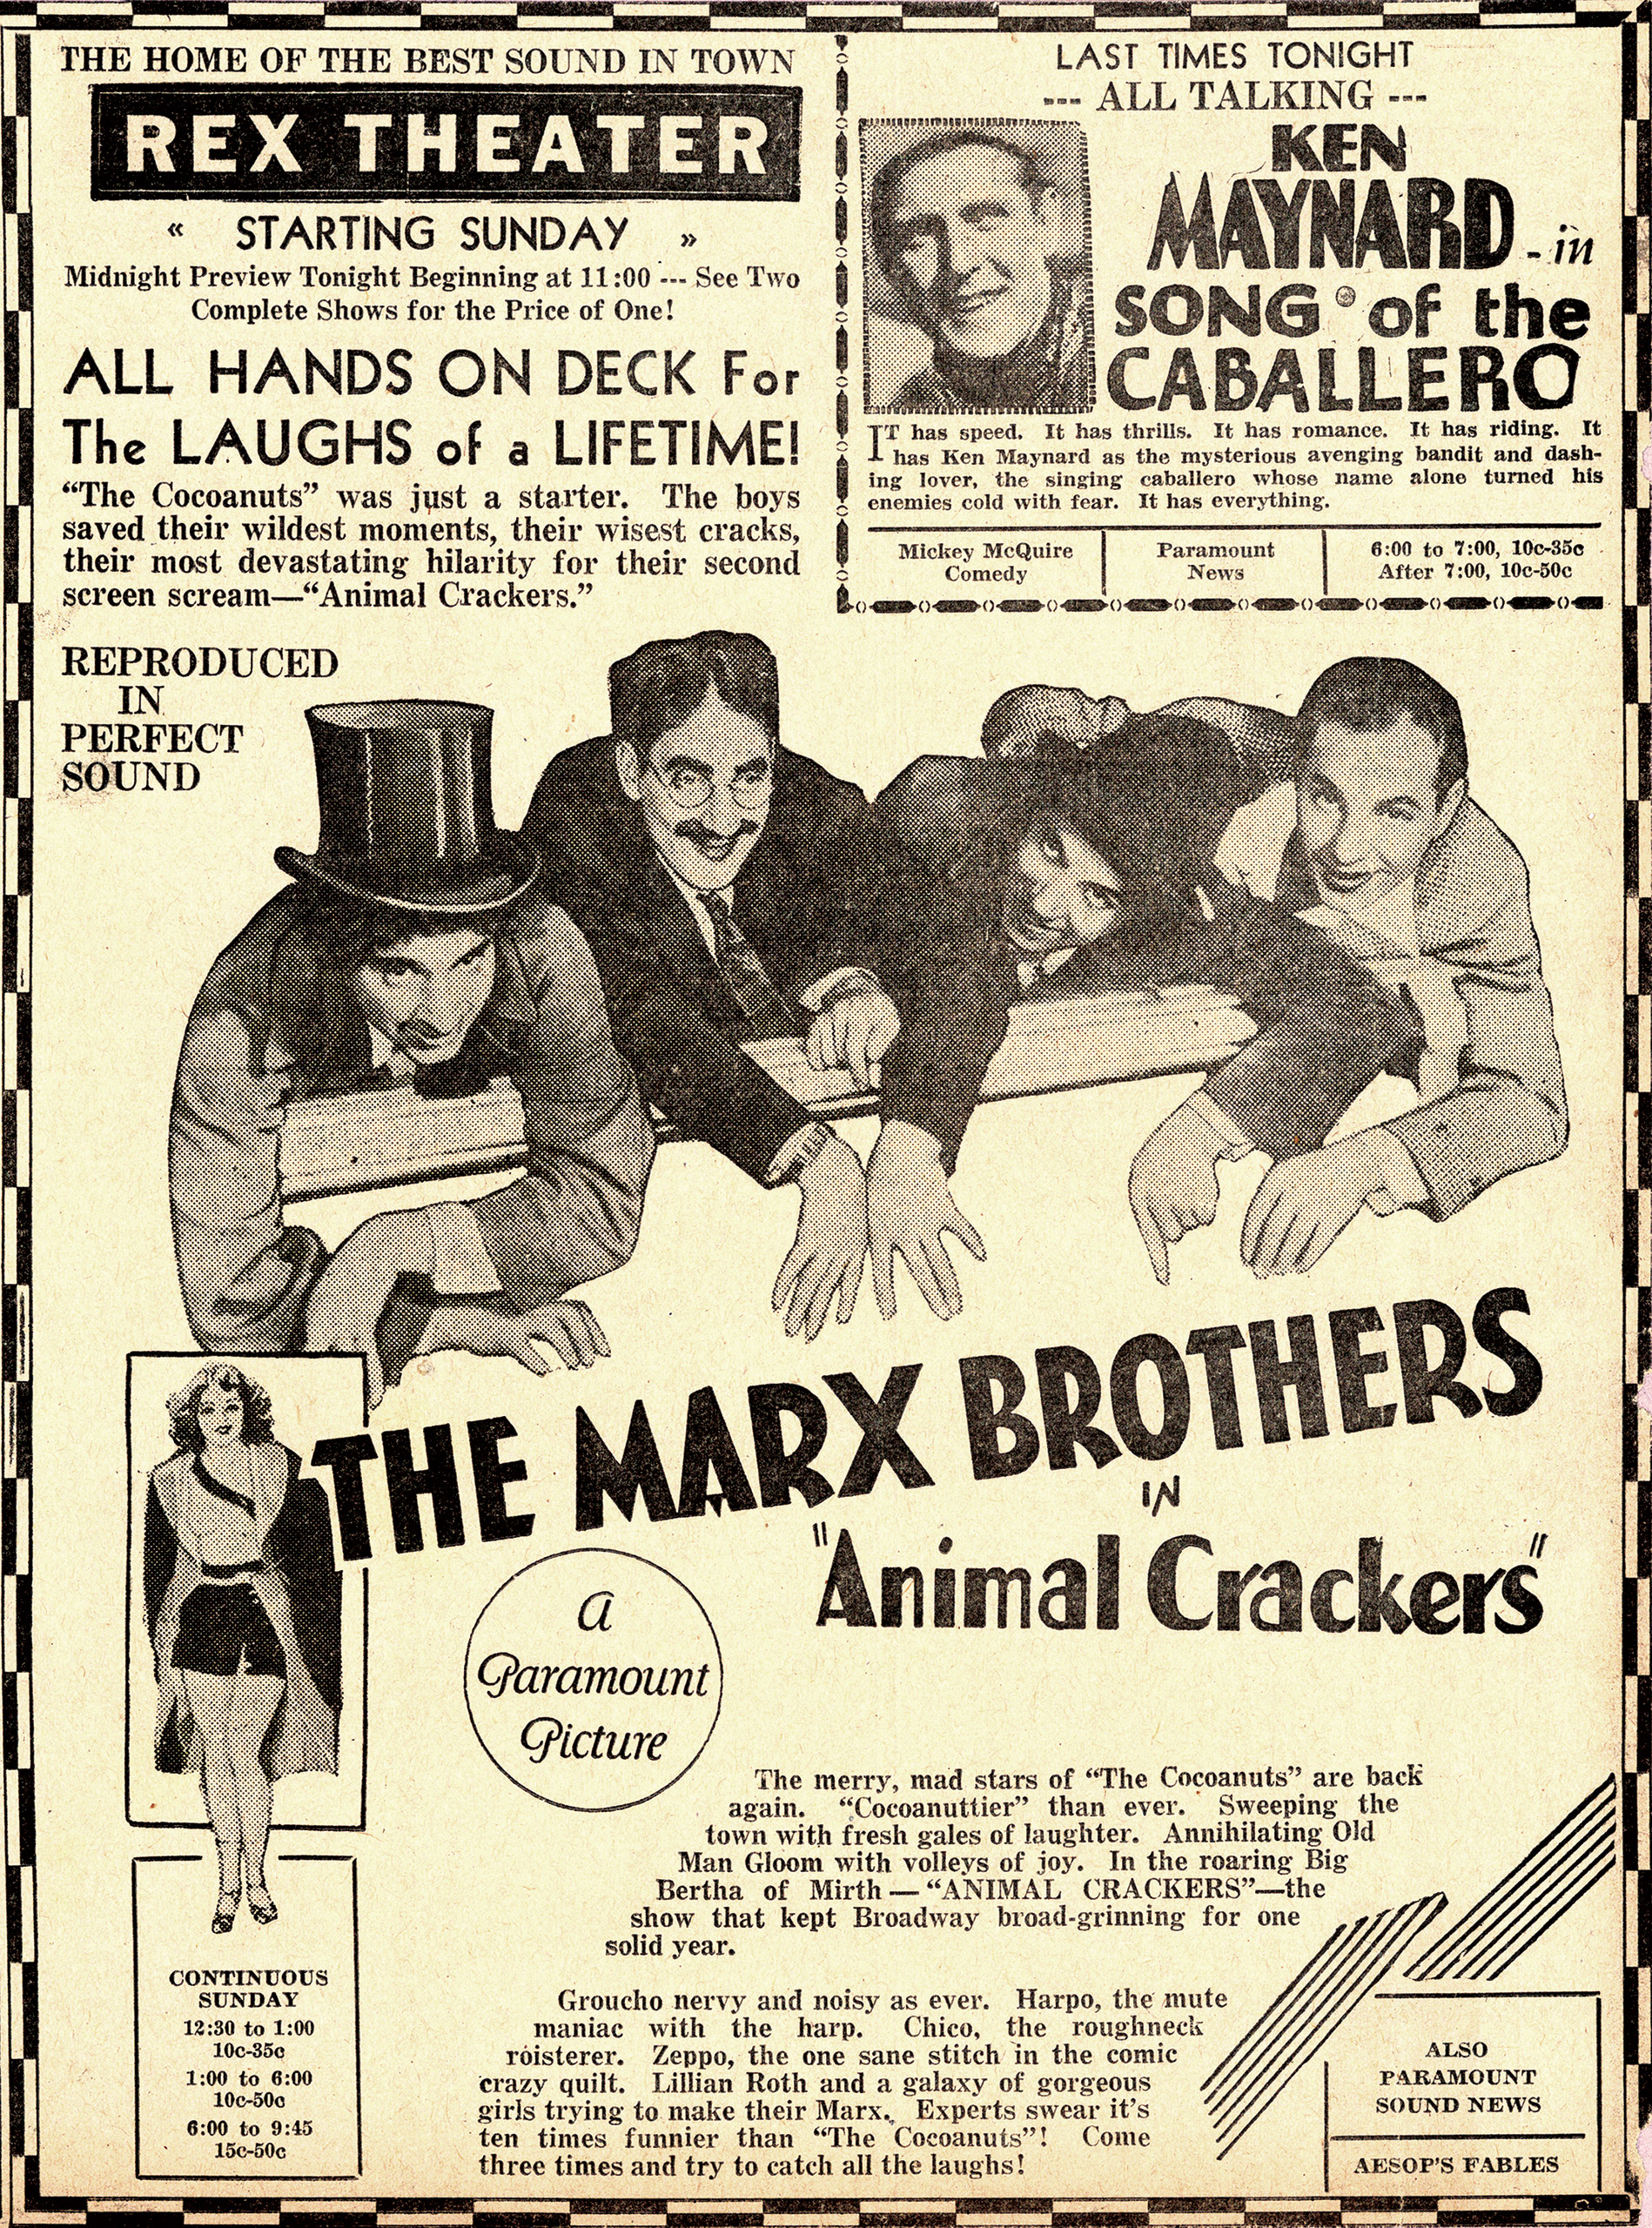 Animal Crackers newspaper advertisement, 1930.